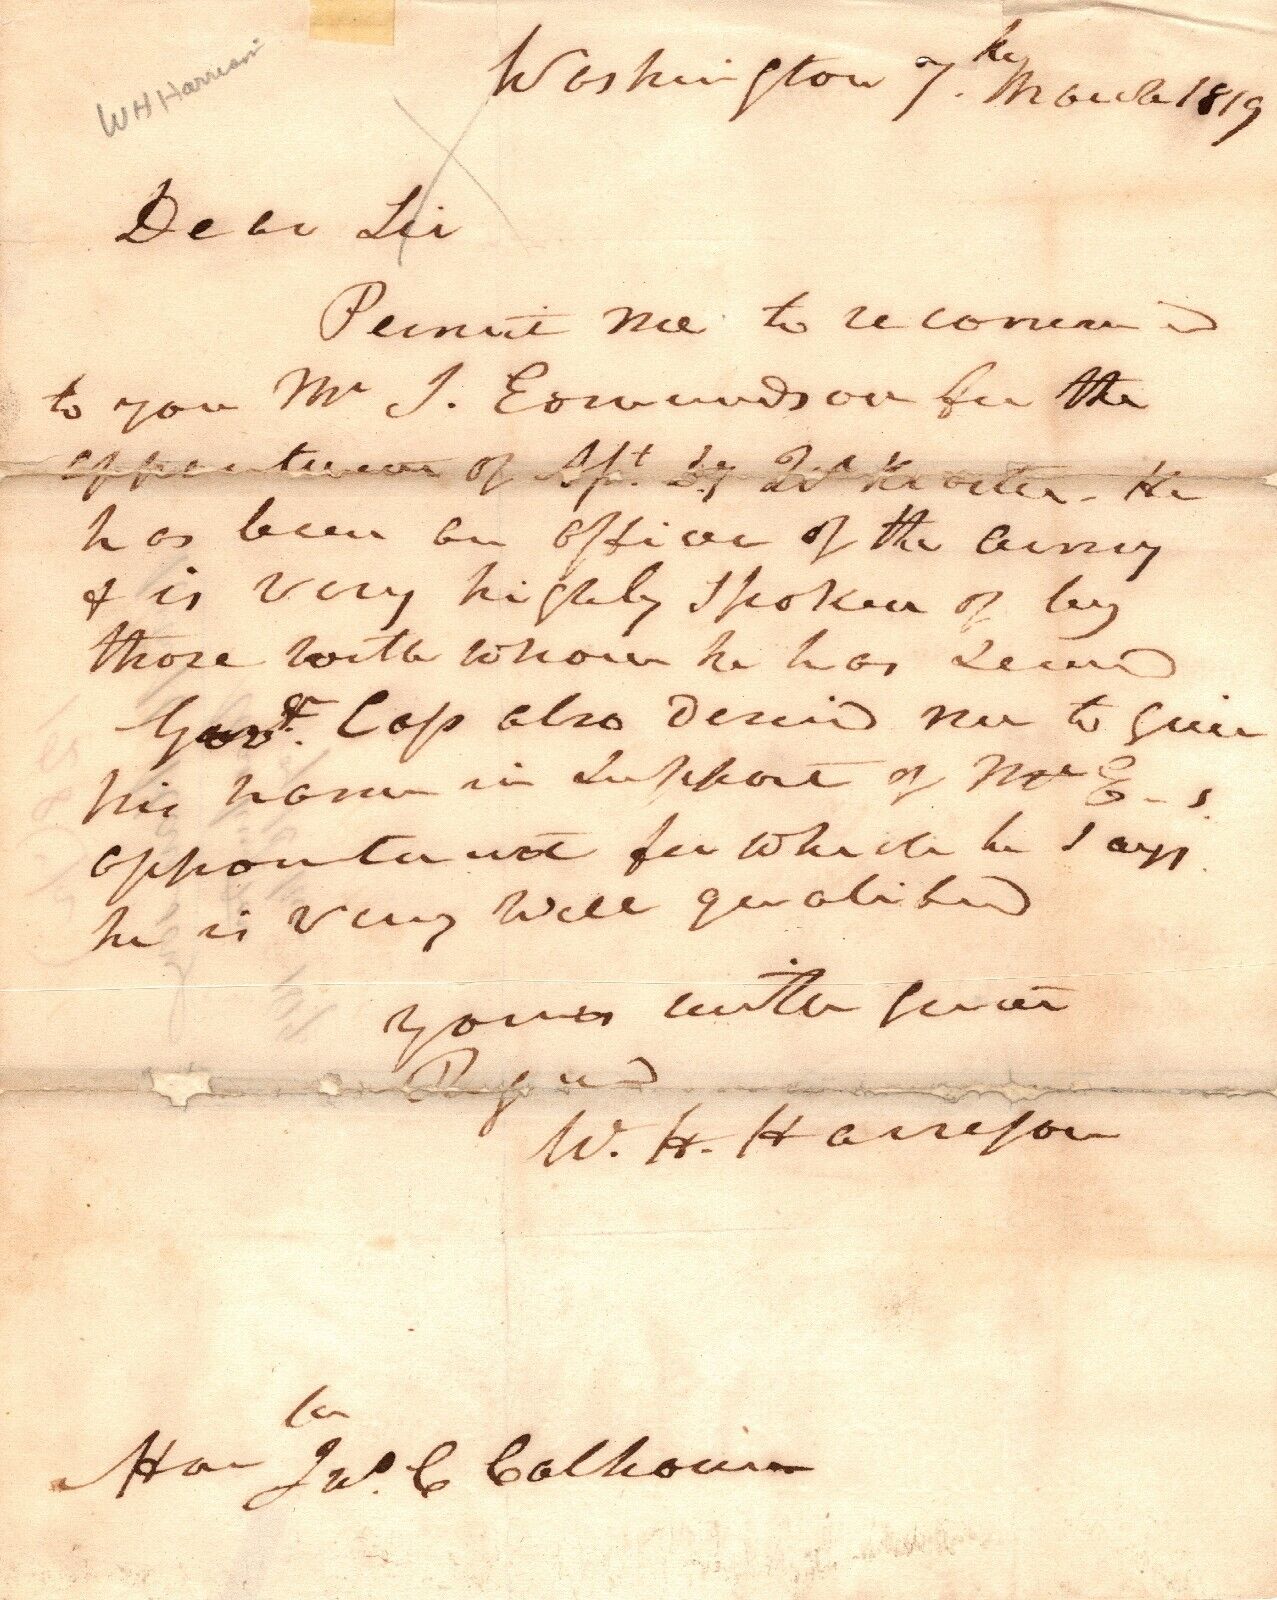 William Henry Harrison - Important Autograph Letter Signed - To John C. Calhoun